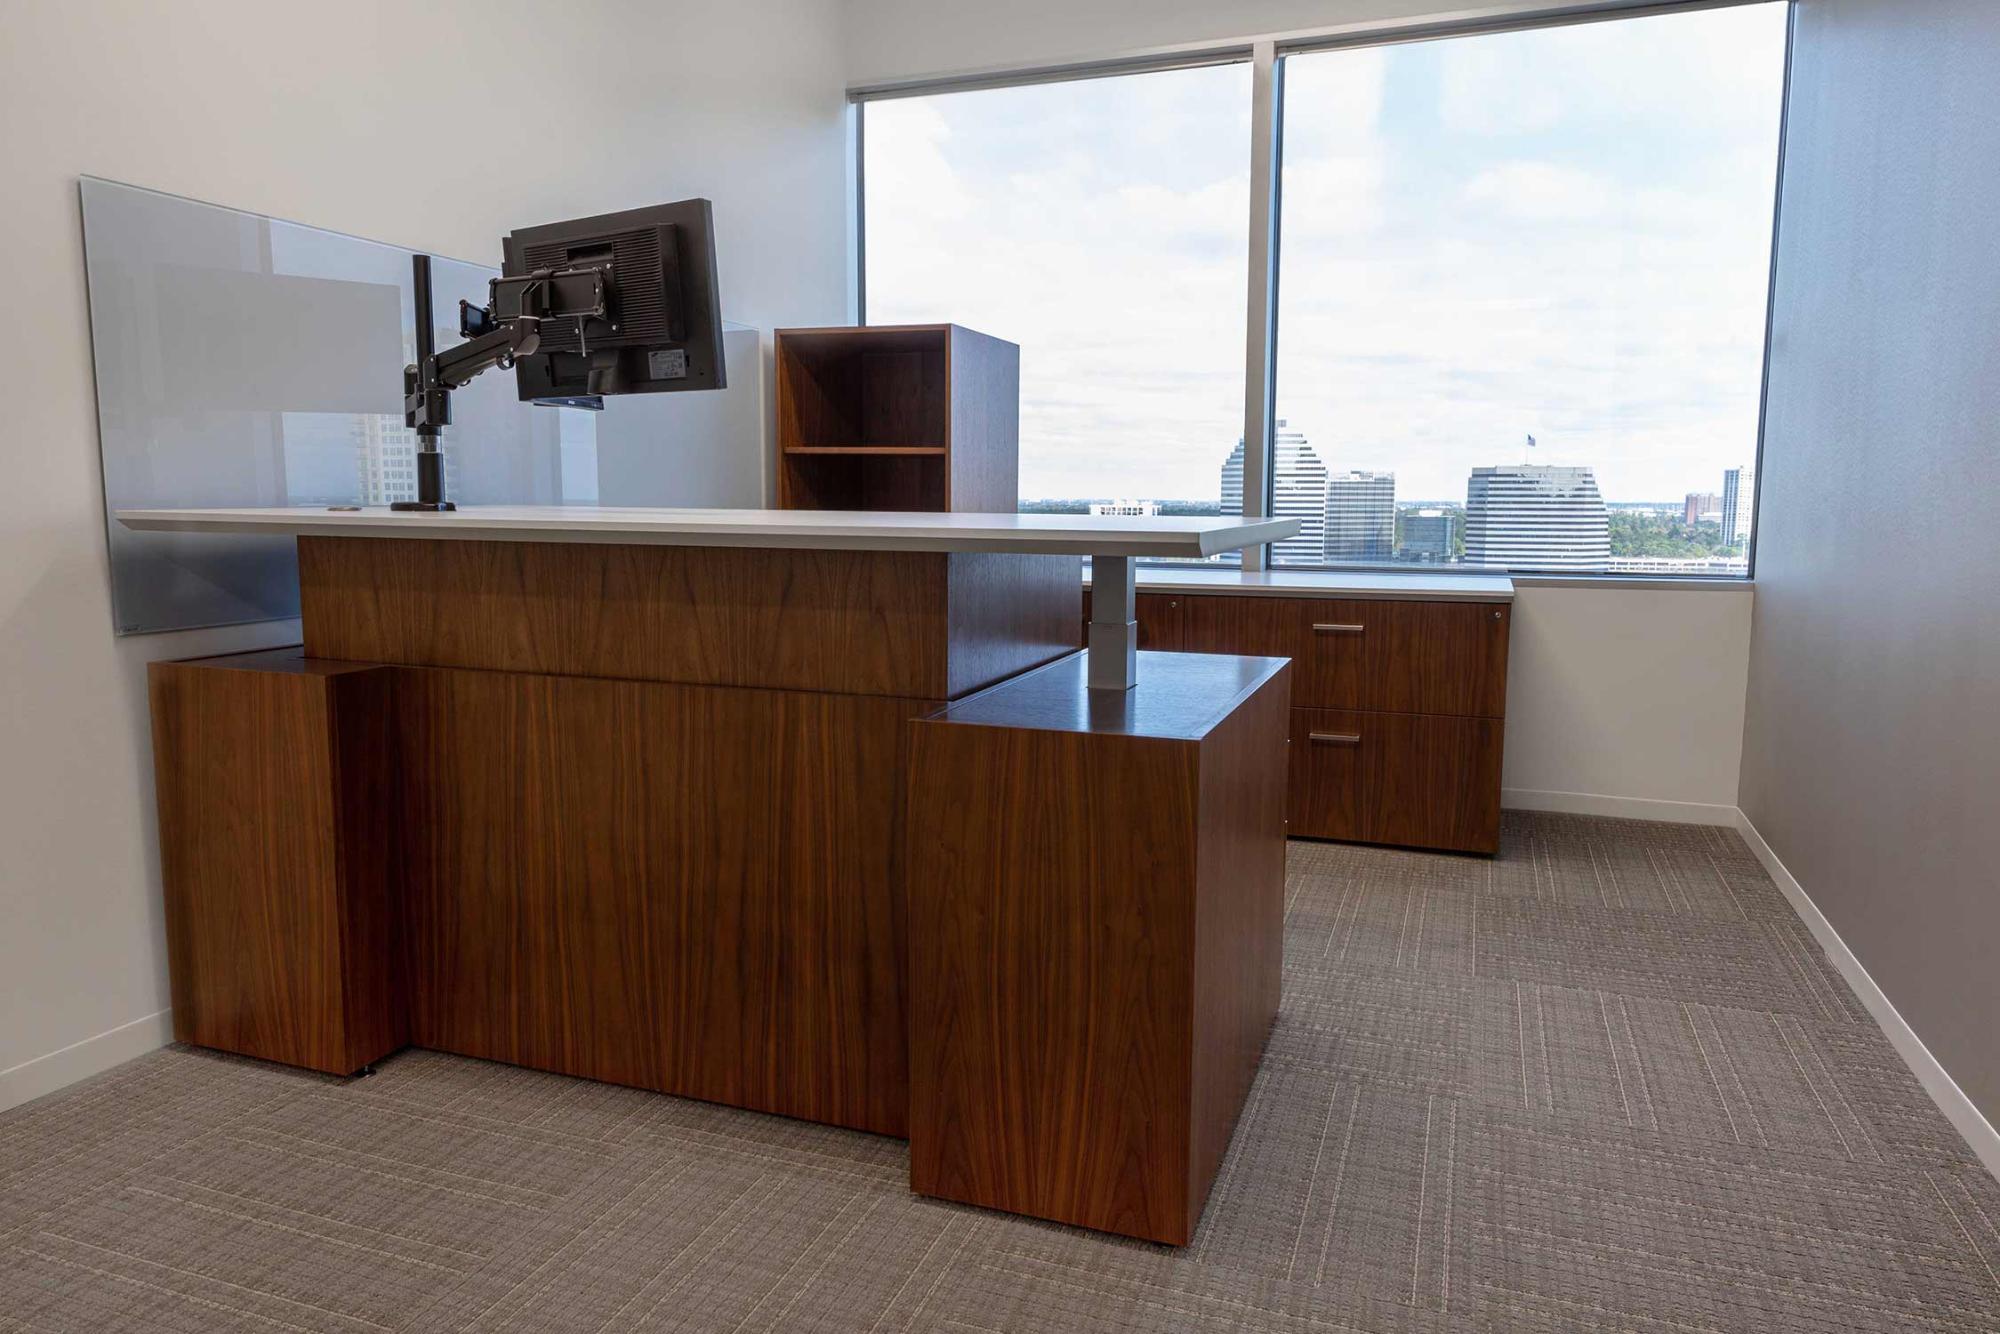 DARRAN Furniture - Texas Capital Bank